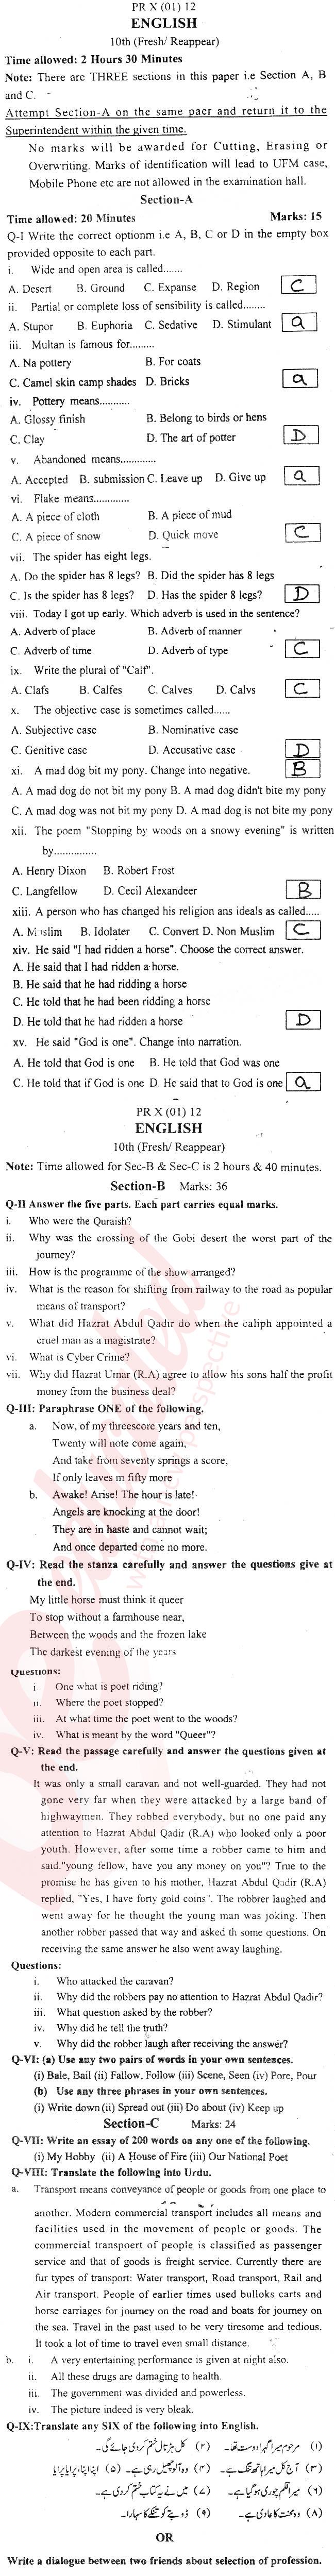 English 10th class Past Paper Group 1 BISE Peshawar 2012